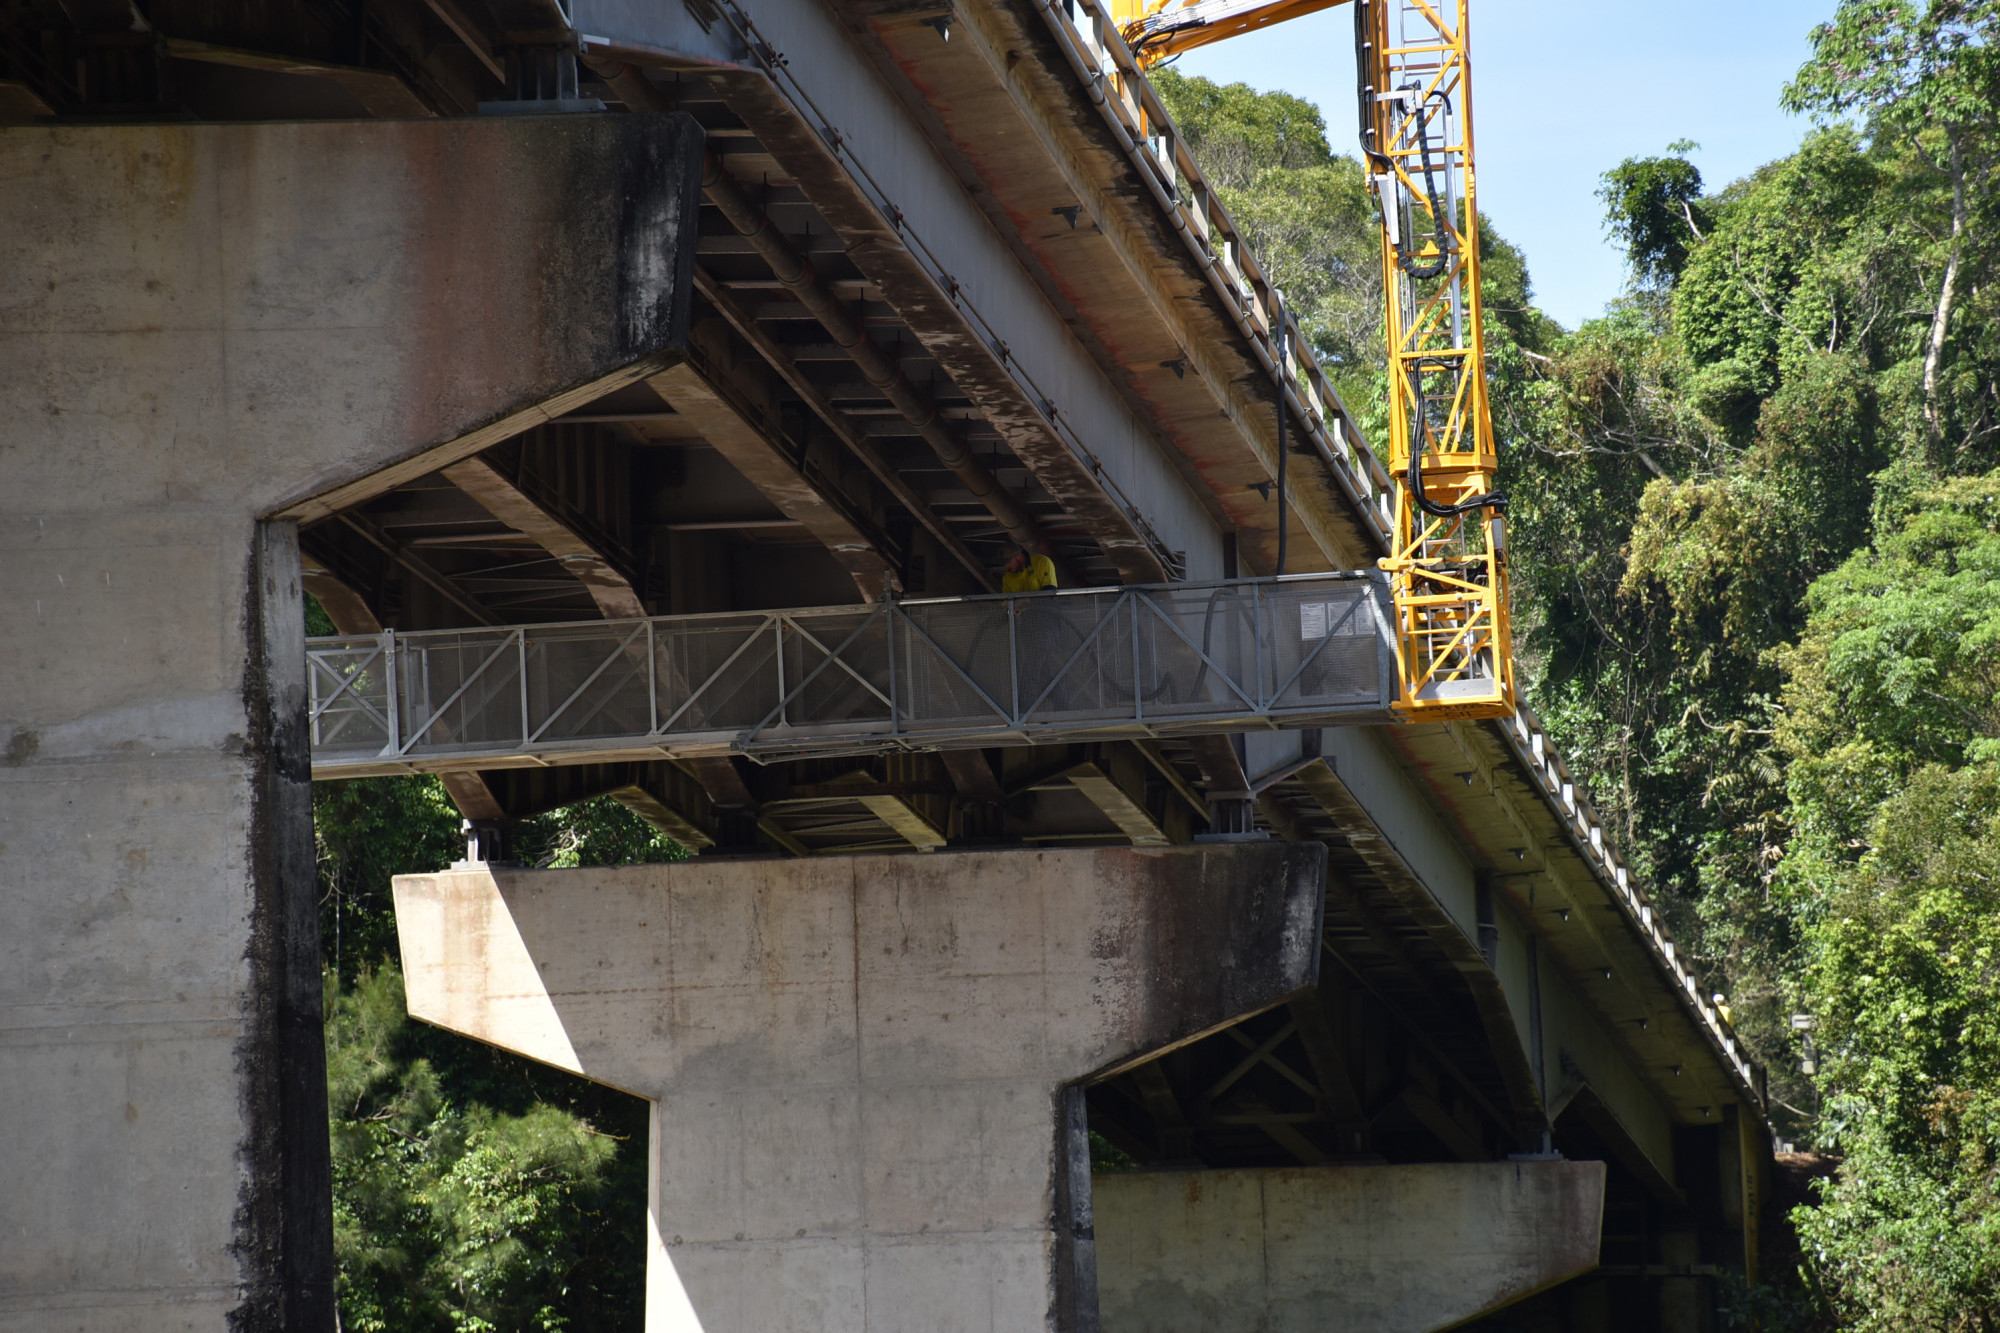 The Barron River Bridge being inspected TMR staff